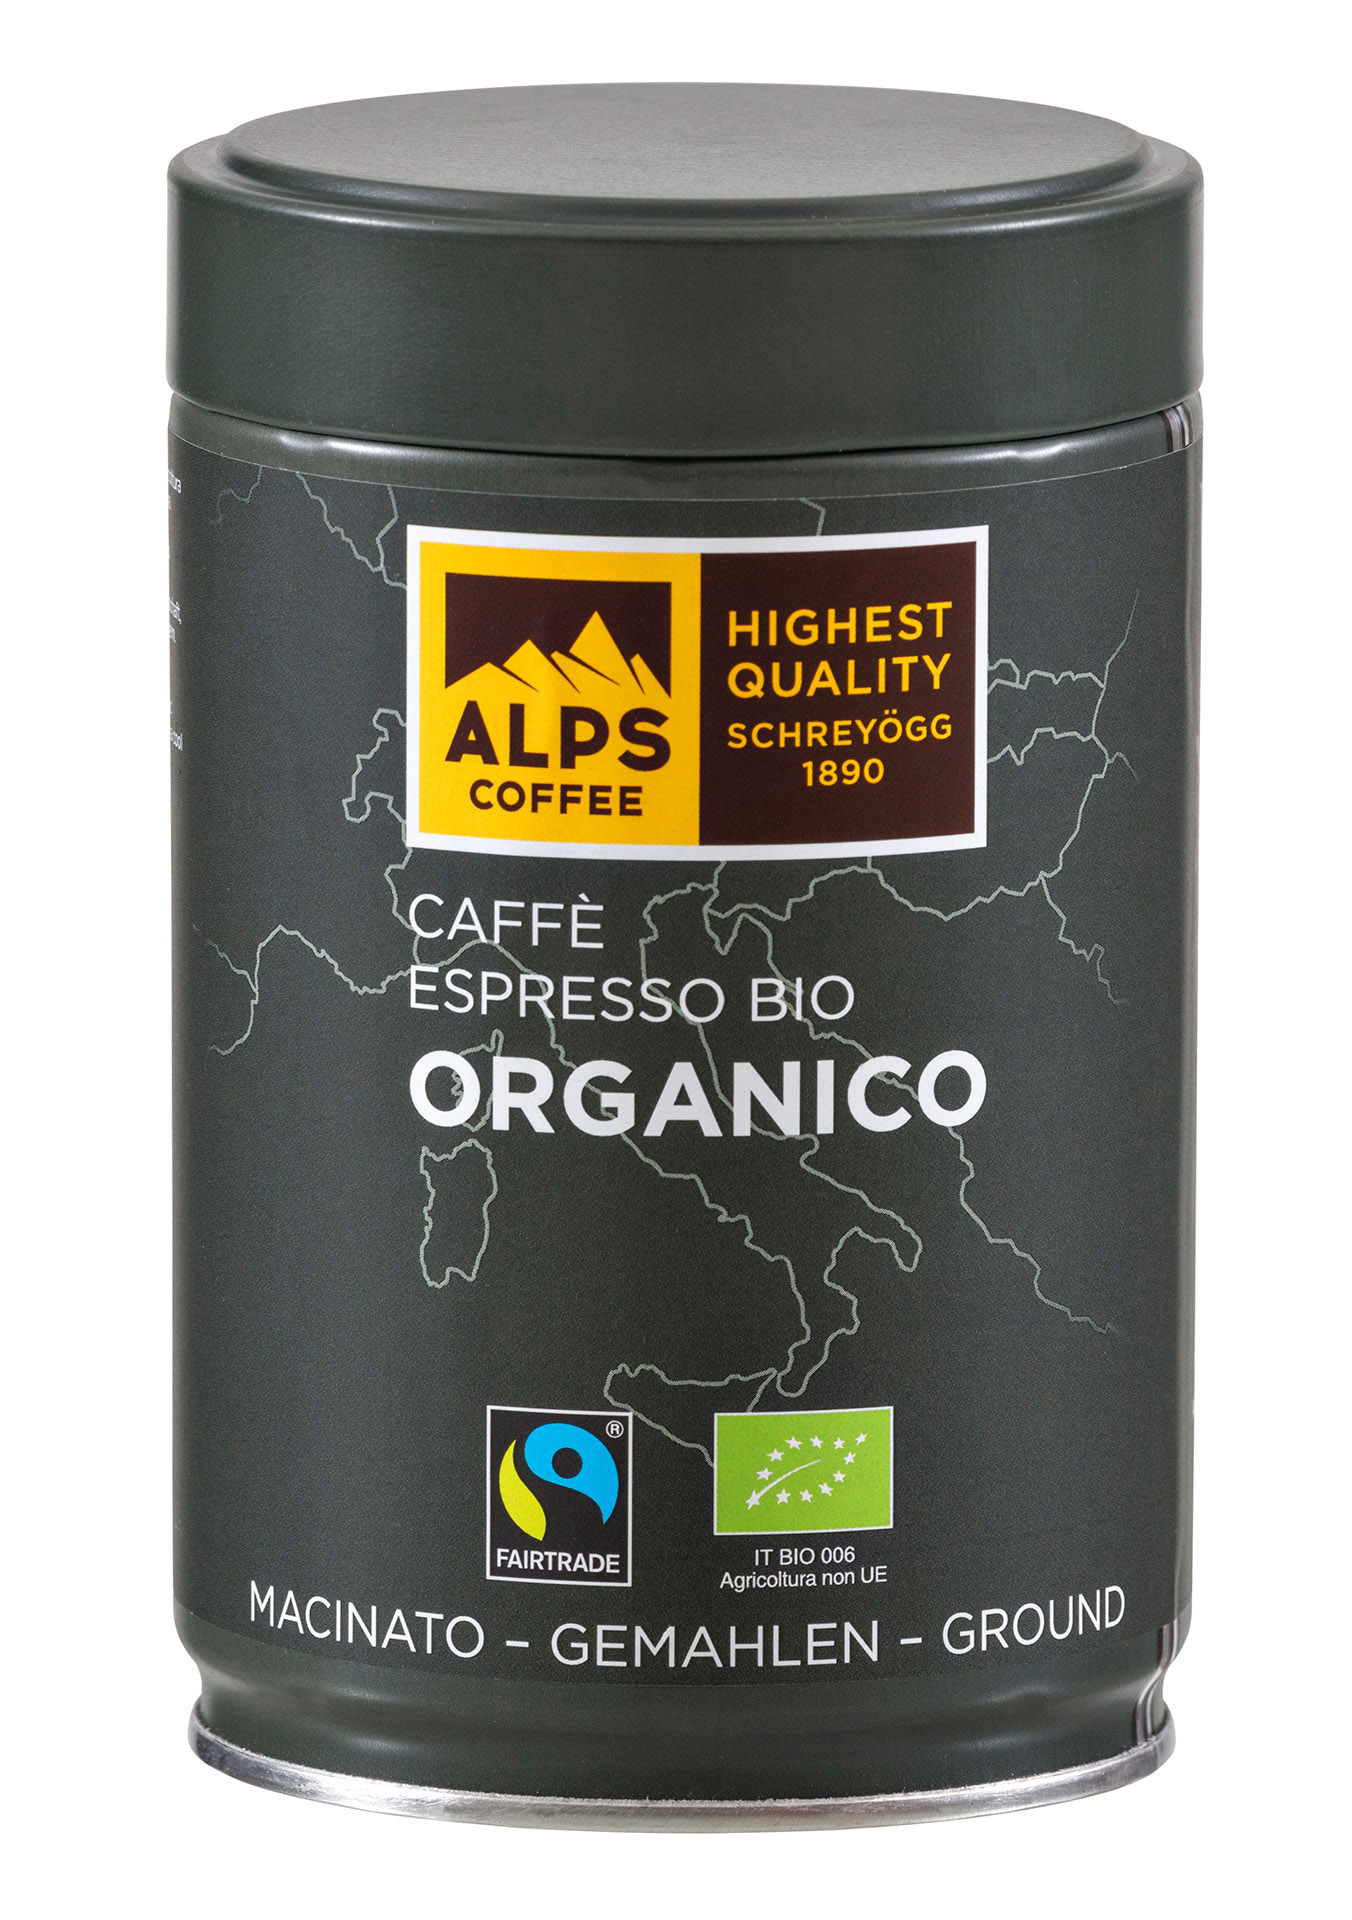 Caffè Espresso Bio Organico (Flo) 250g macinato